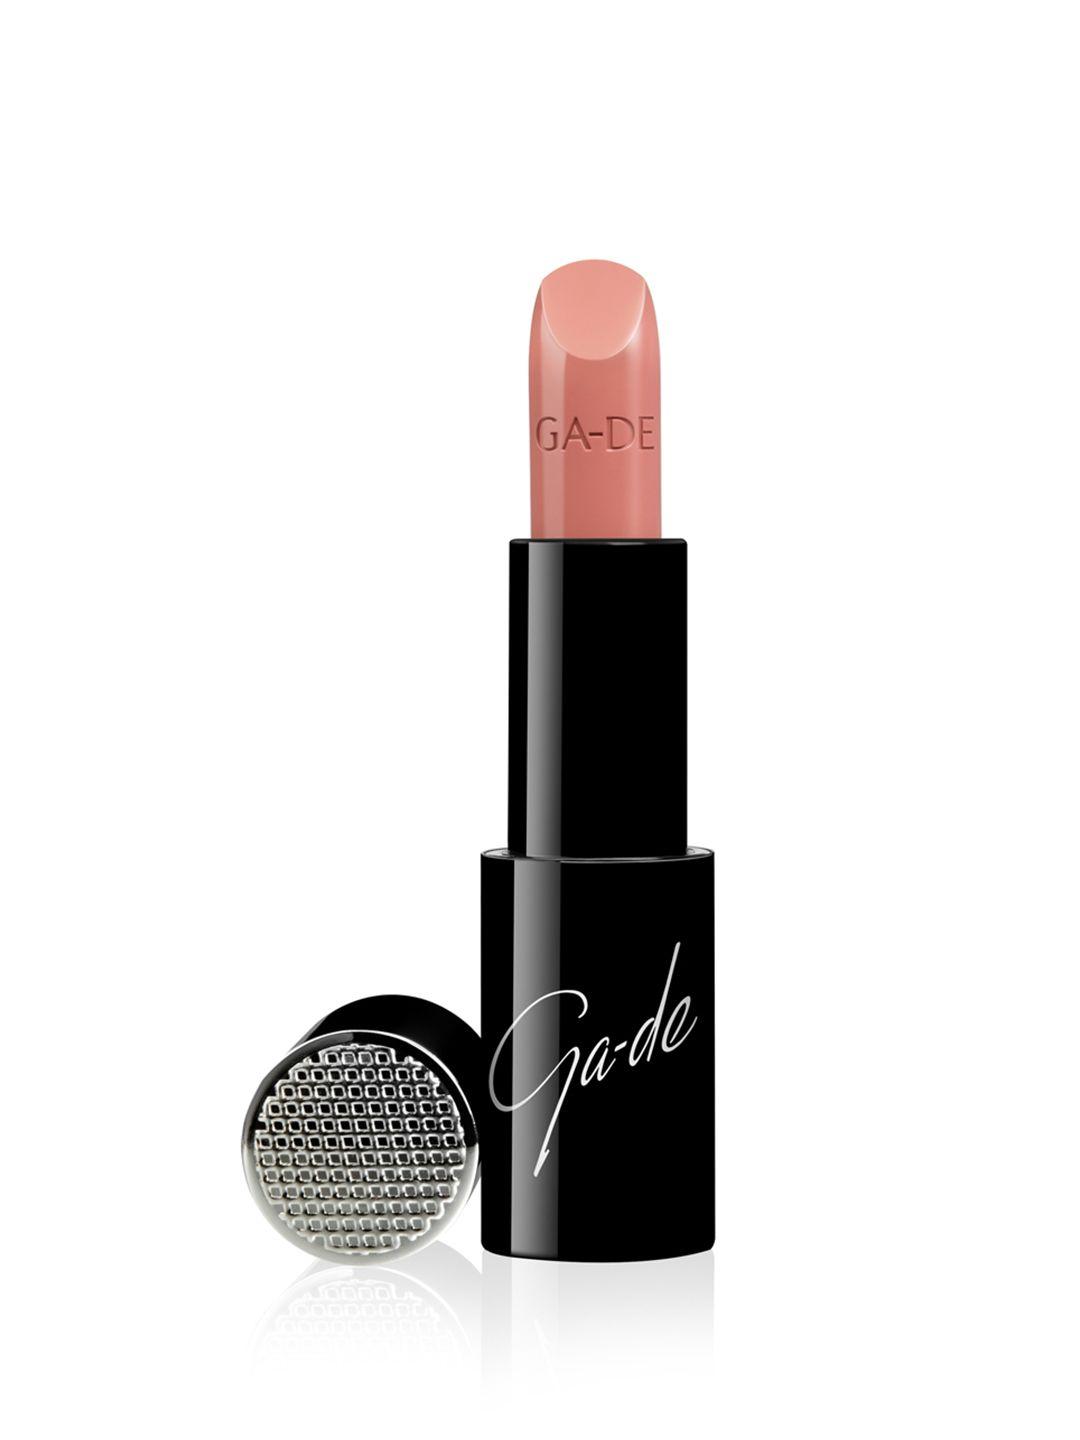 ga-de selfie luminous full-cover creamy lipstick with argan oil - rio 853